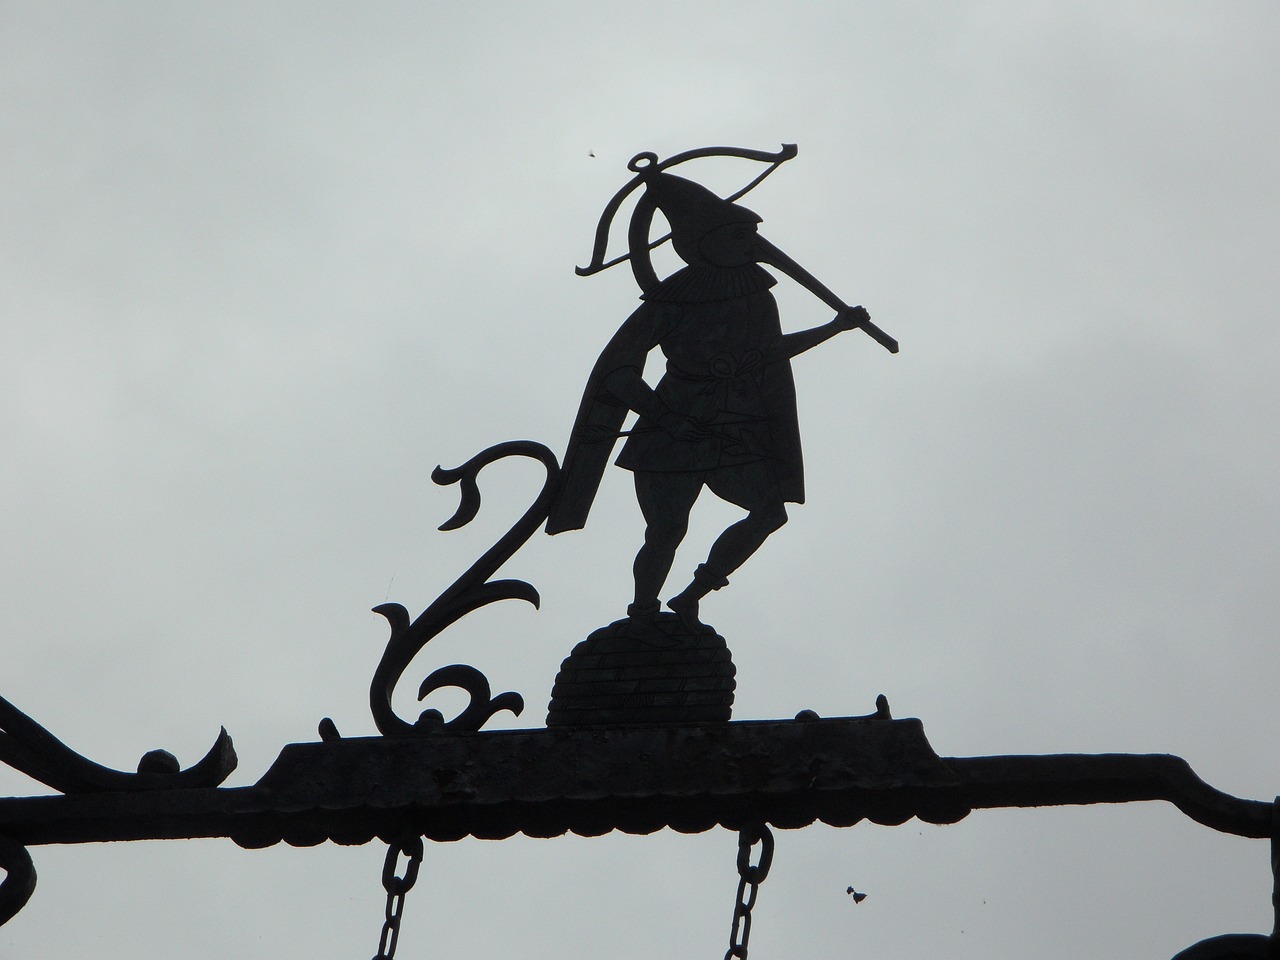 a clock mounted to the side of a building, a statue, inspired by Makuzu Kōzan, flickr, folk art, an umbrella top, single silhouette figure, wielding a decorated halberd, richard iv the roman king photo